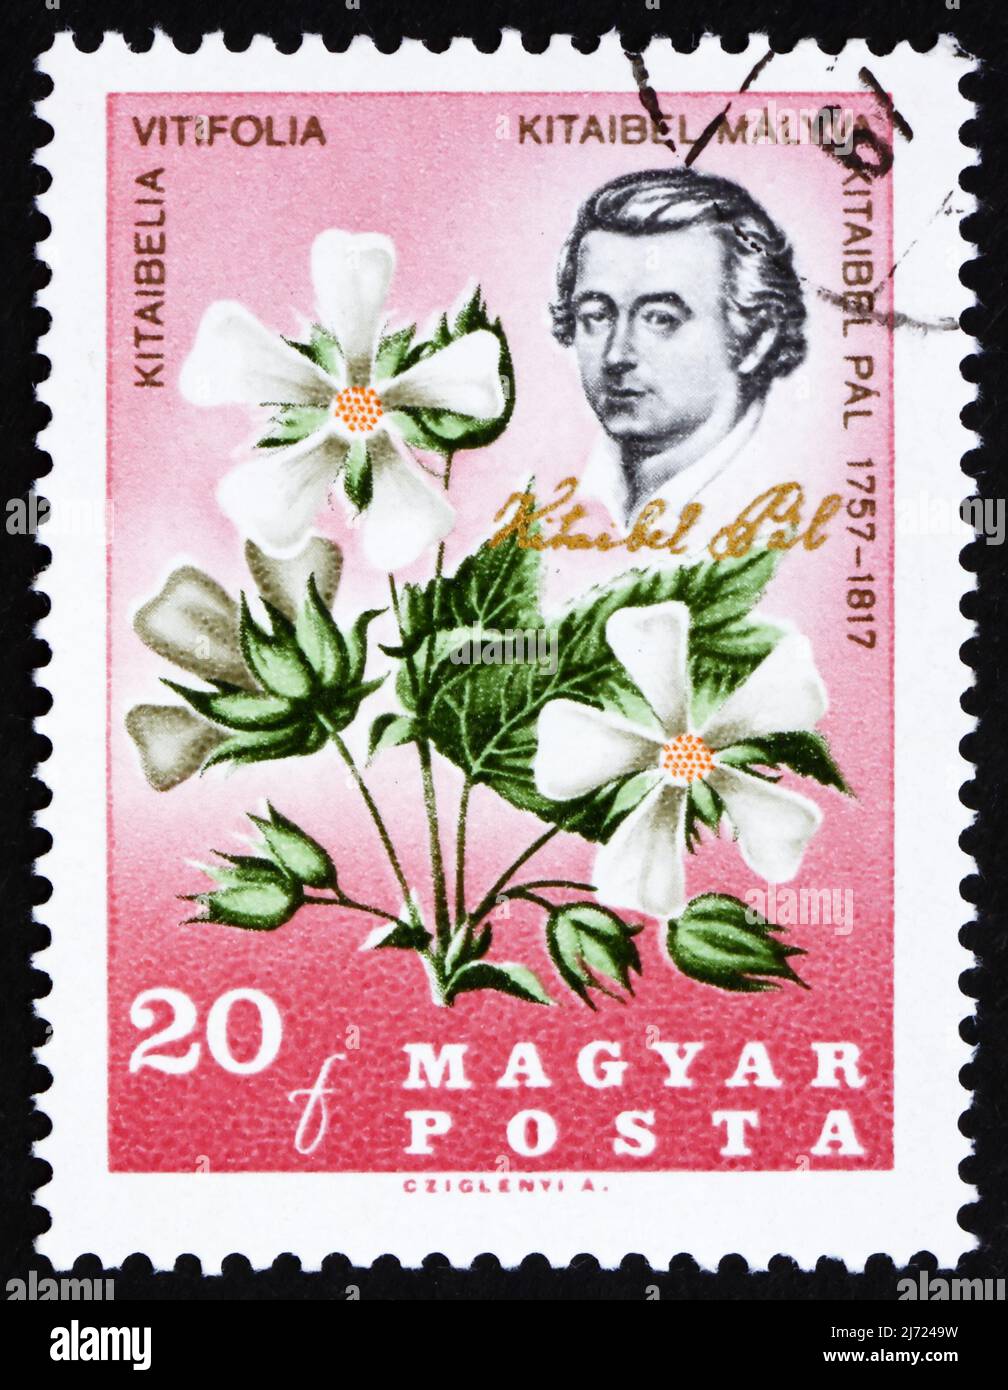 HUNGARY - CIRCA 1967: a stamp printed in the Hungary shows Pal Kitaibel, botanist, chemist, and Kitaibelia Vitifolia, circa 1967 Stock Photo